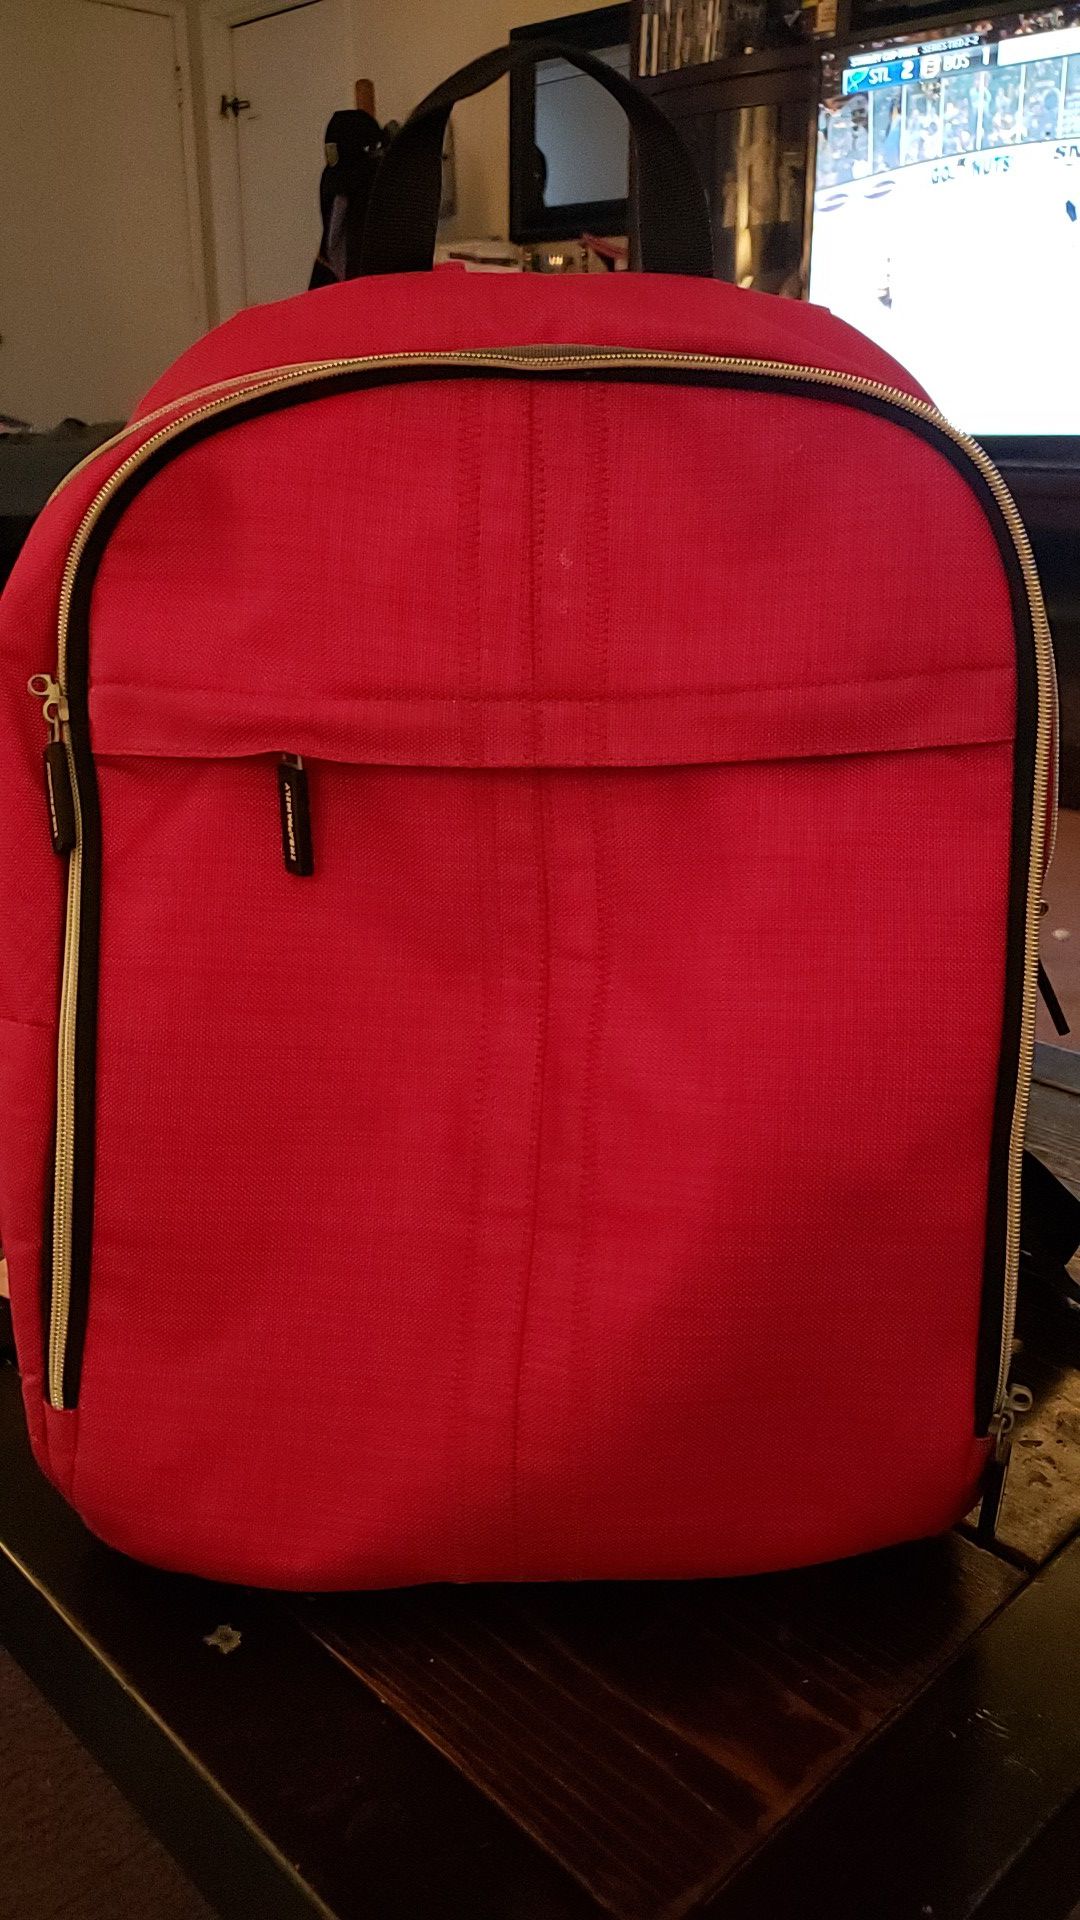 Hot pink IKEA laptop backpack